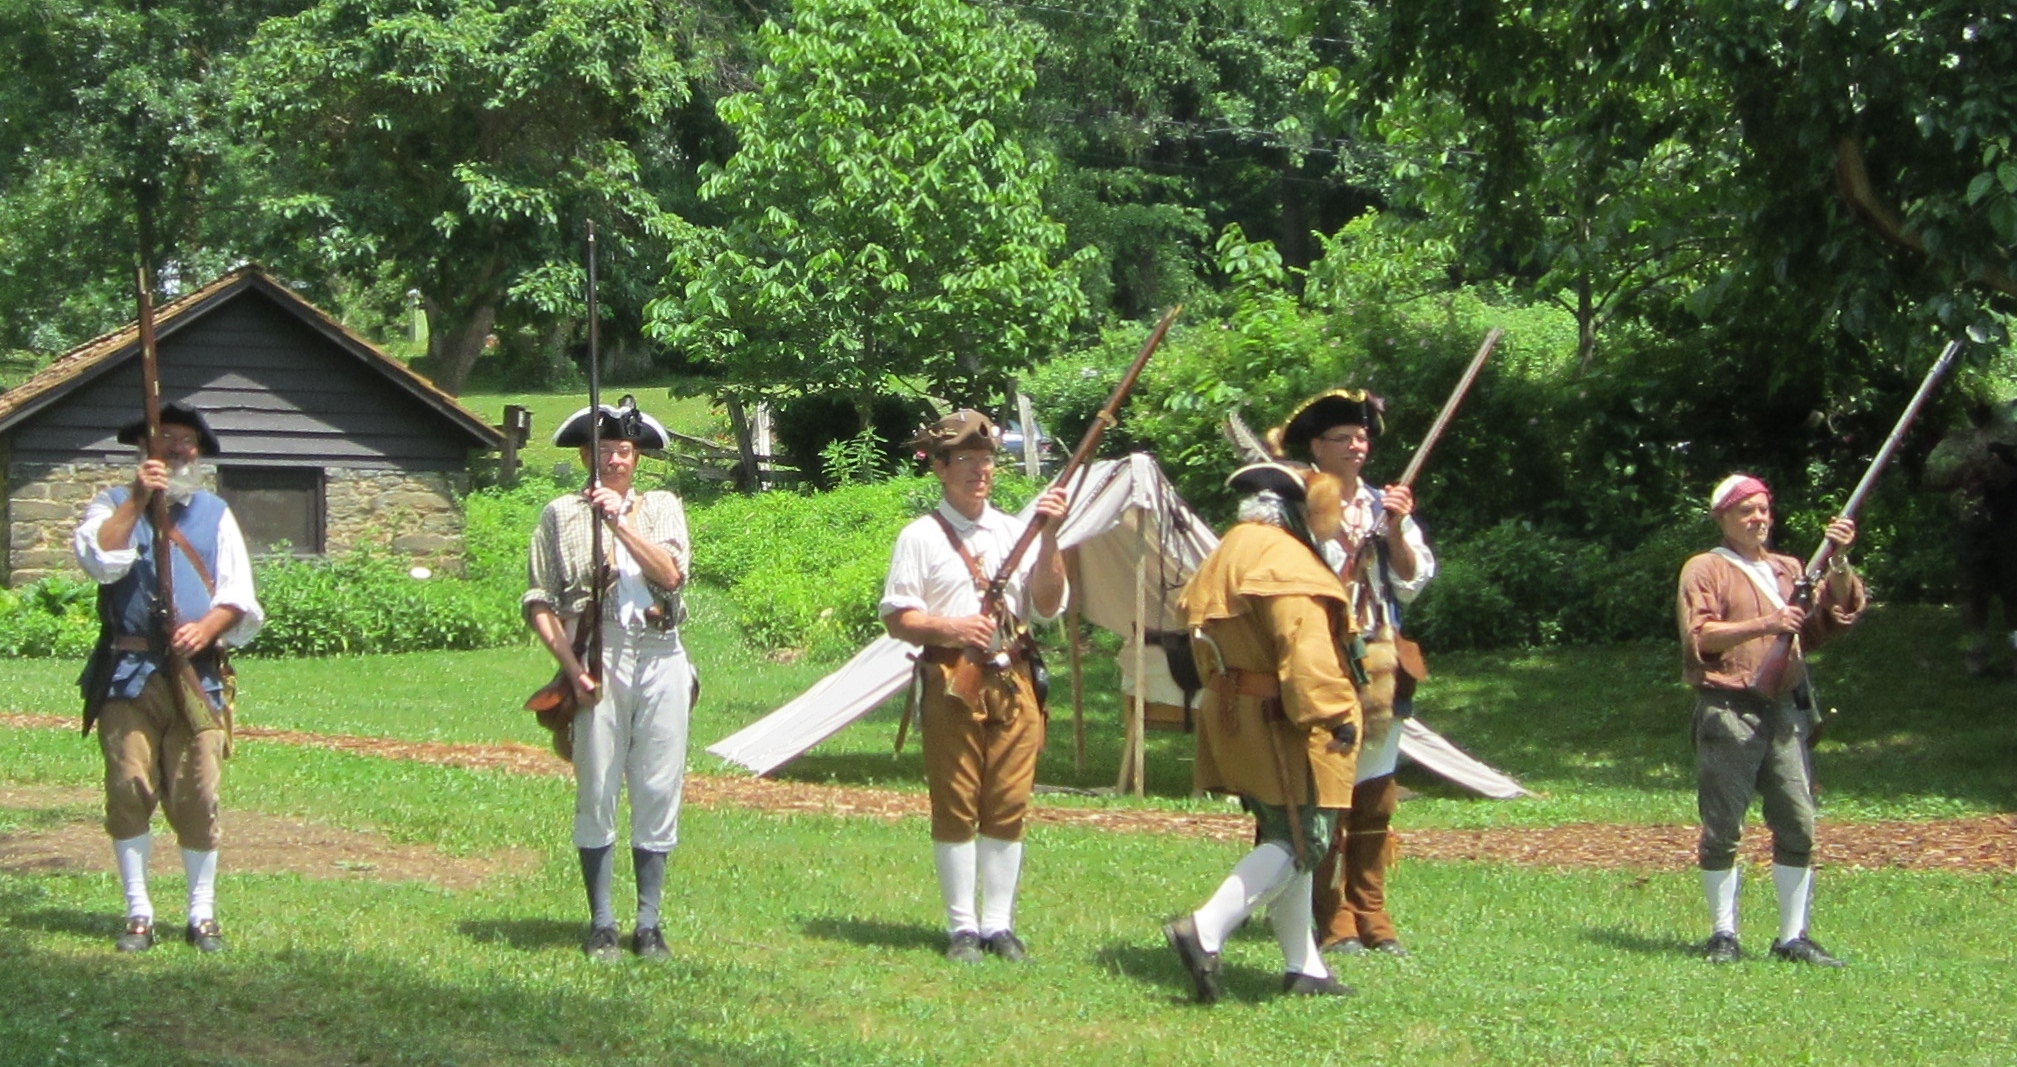 Revolutionary War Encampment – September 4th